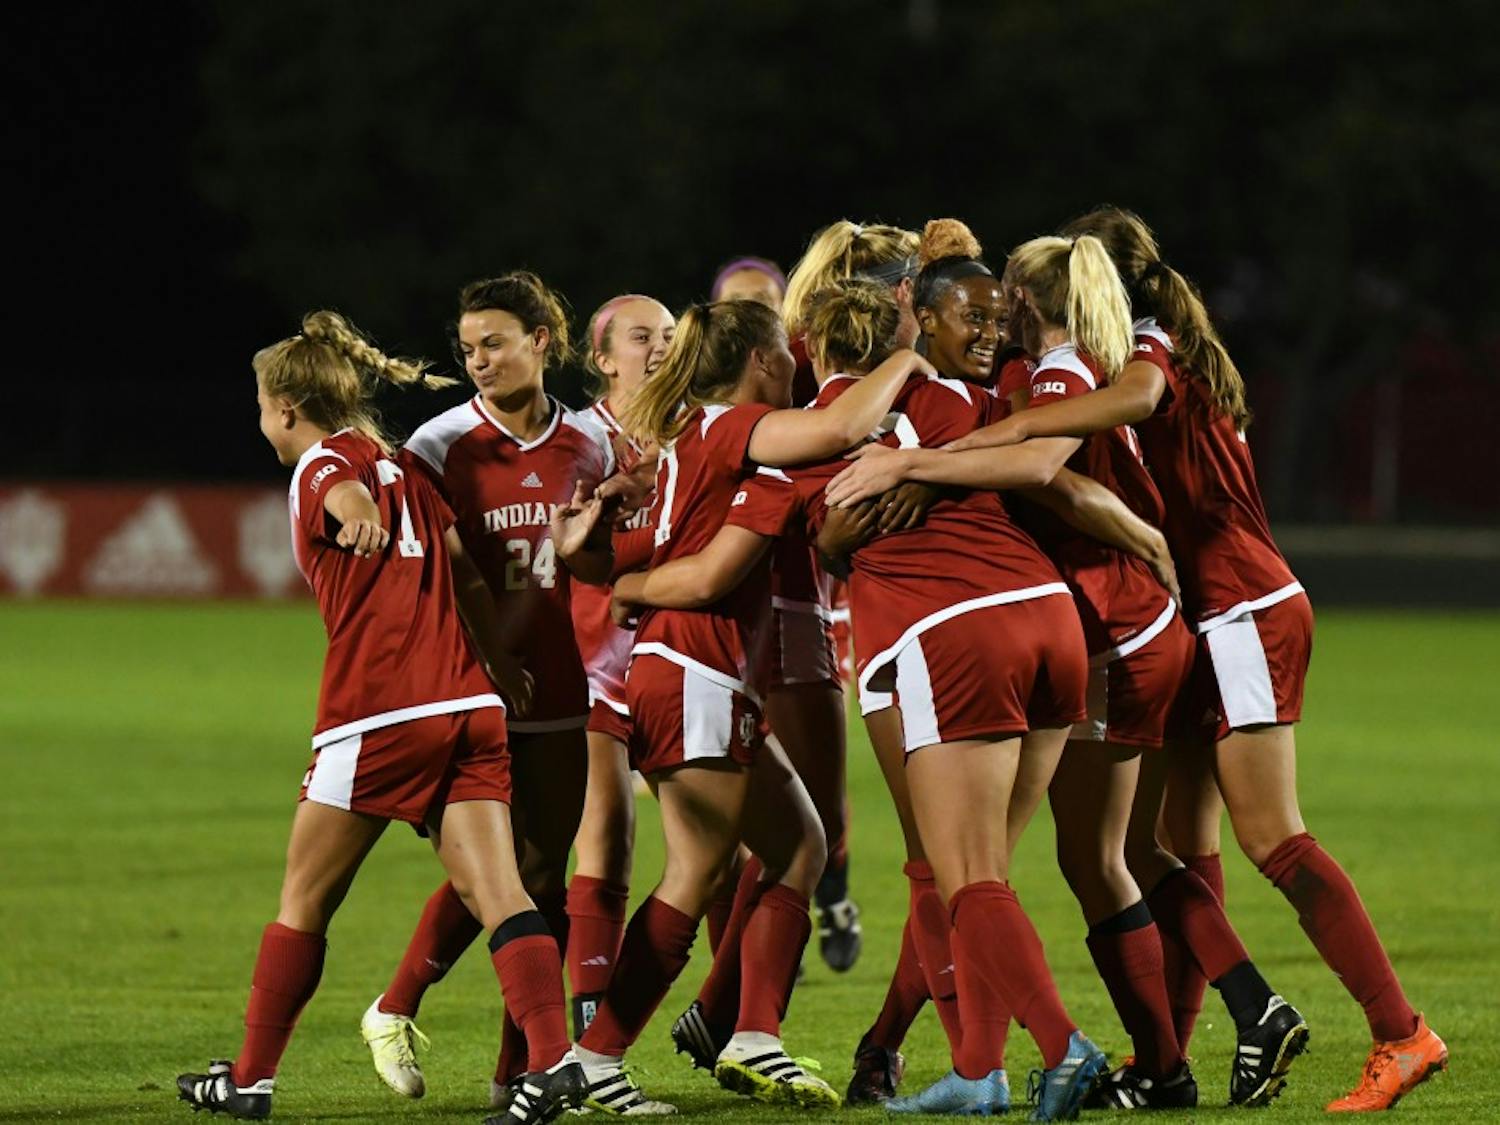 GALLERY: IU women's soccer wins 2-1 over Iowa